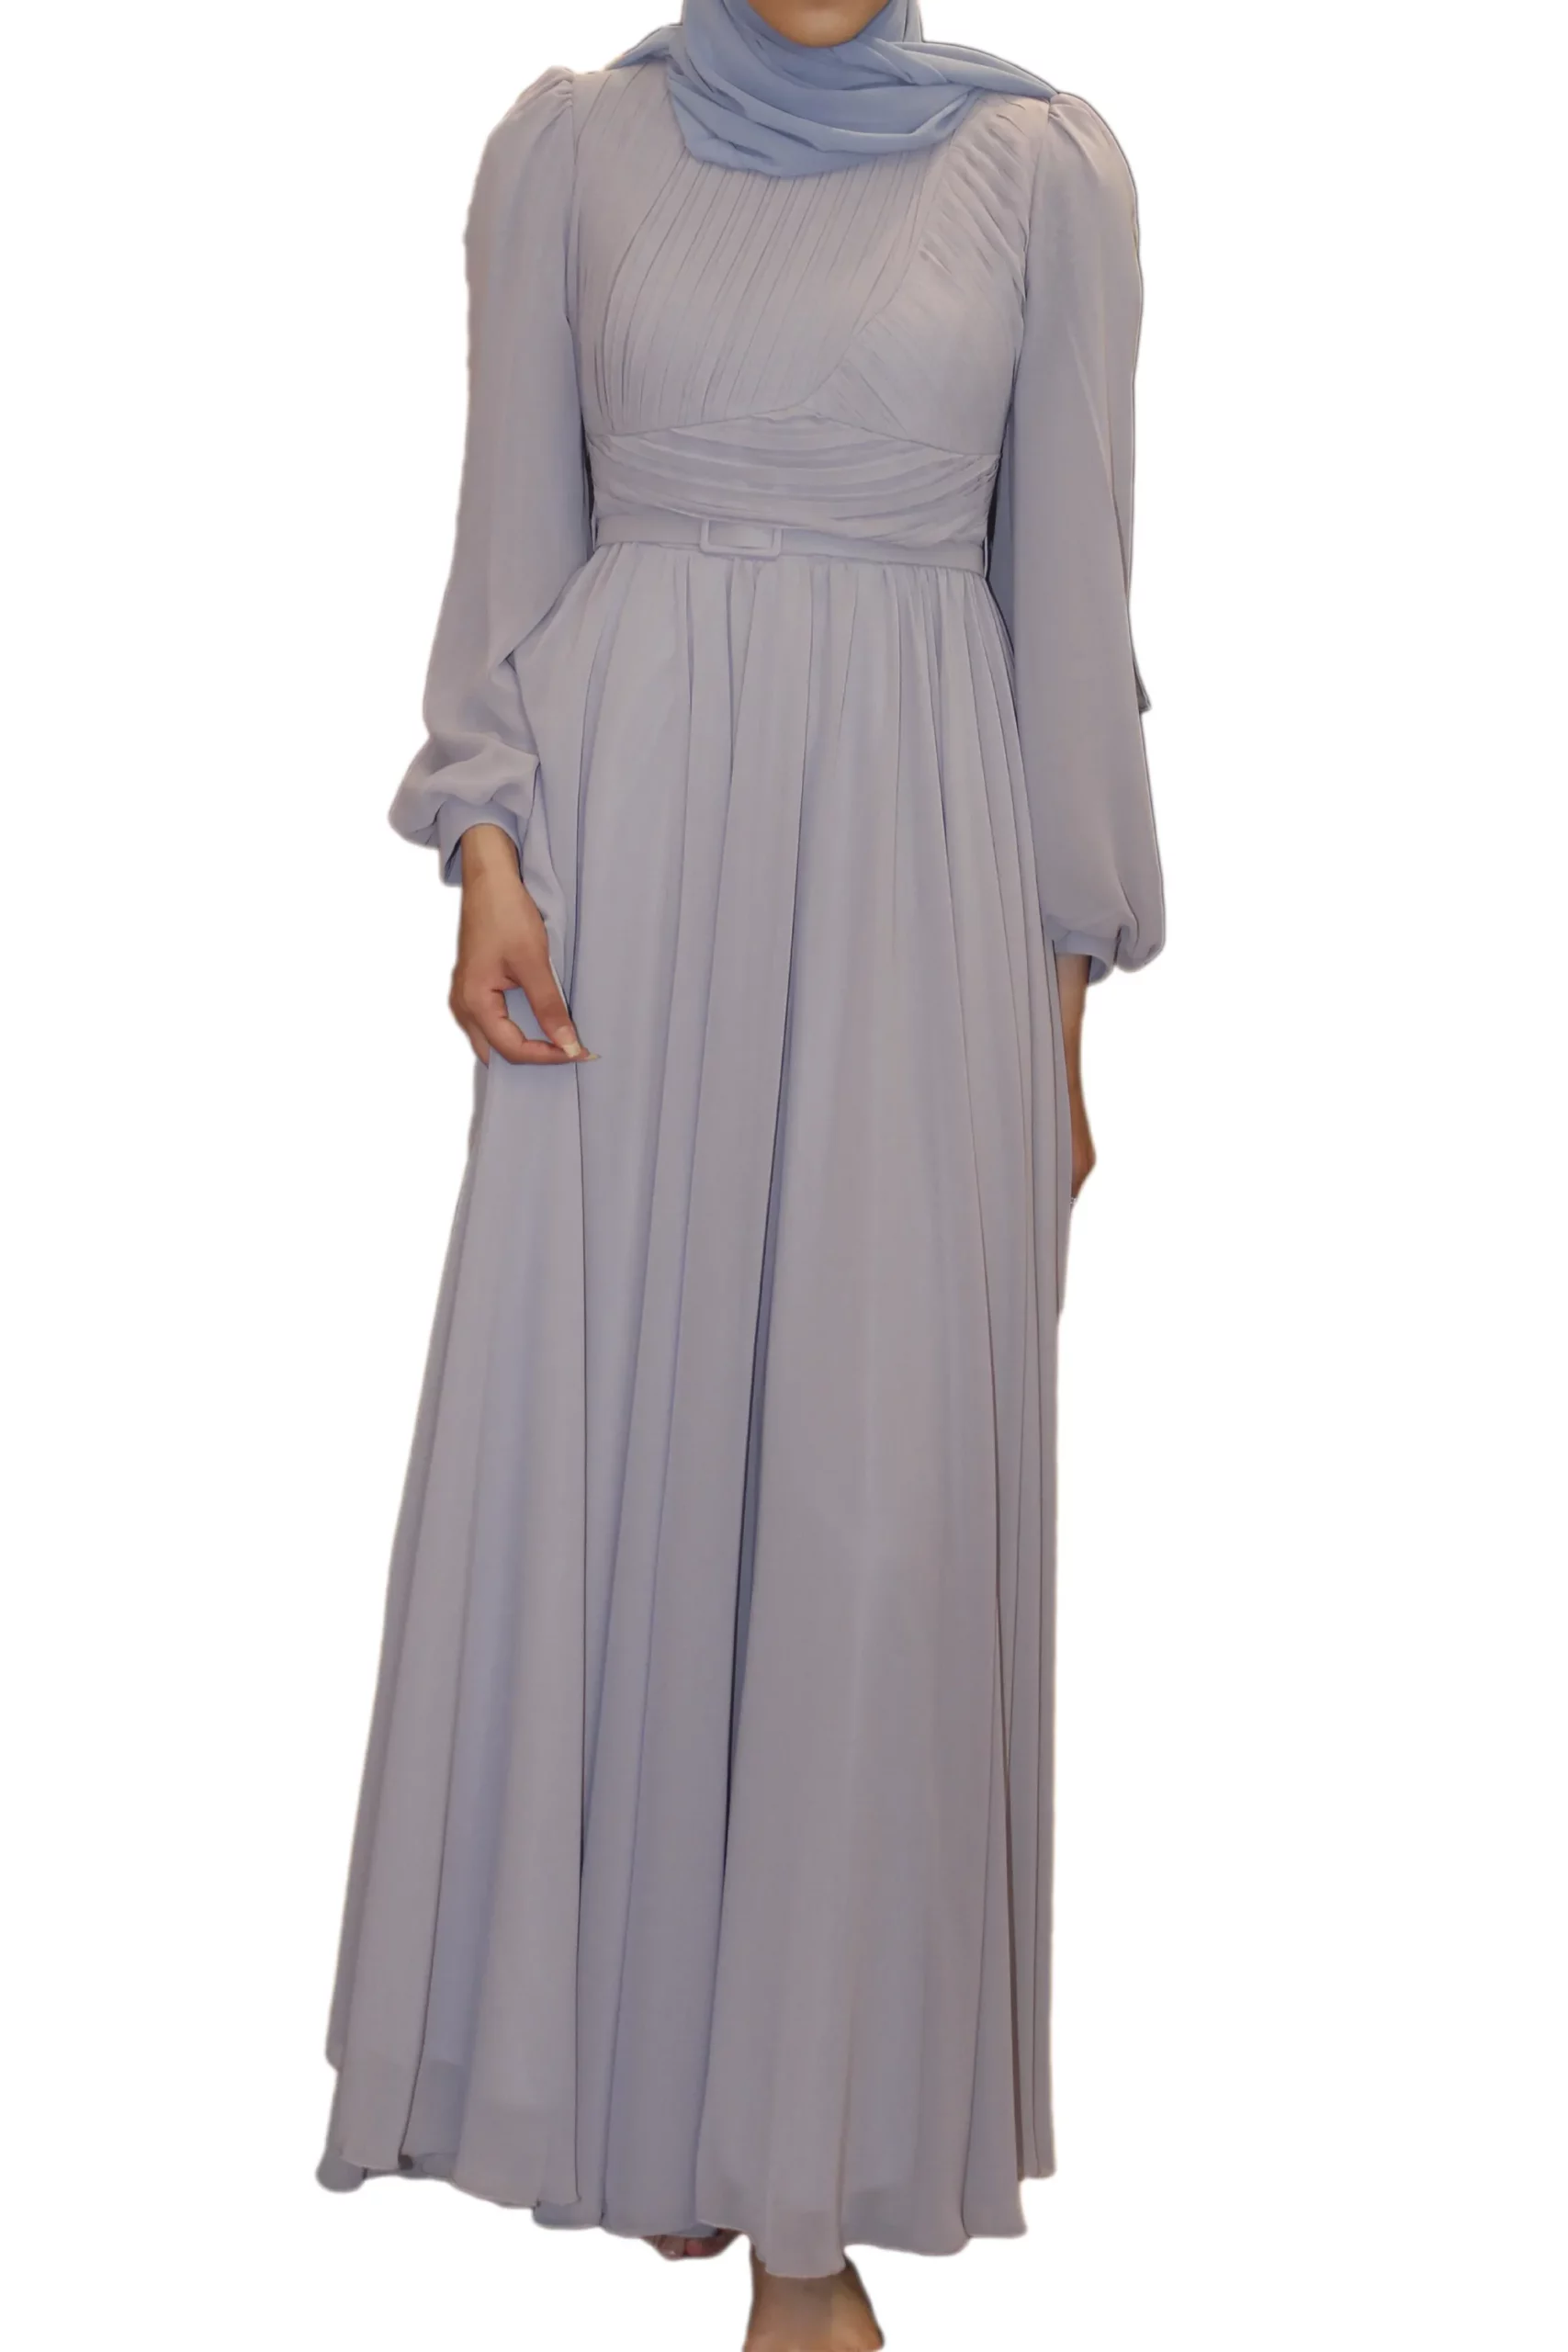 Rebecca Grey Formal Dress